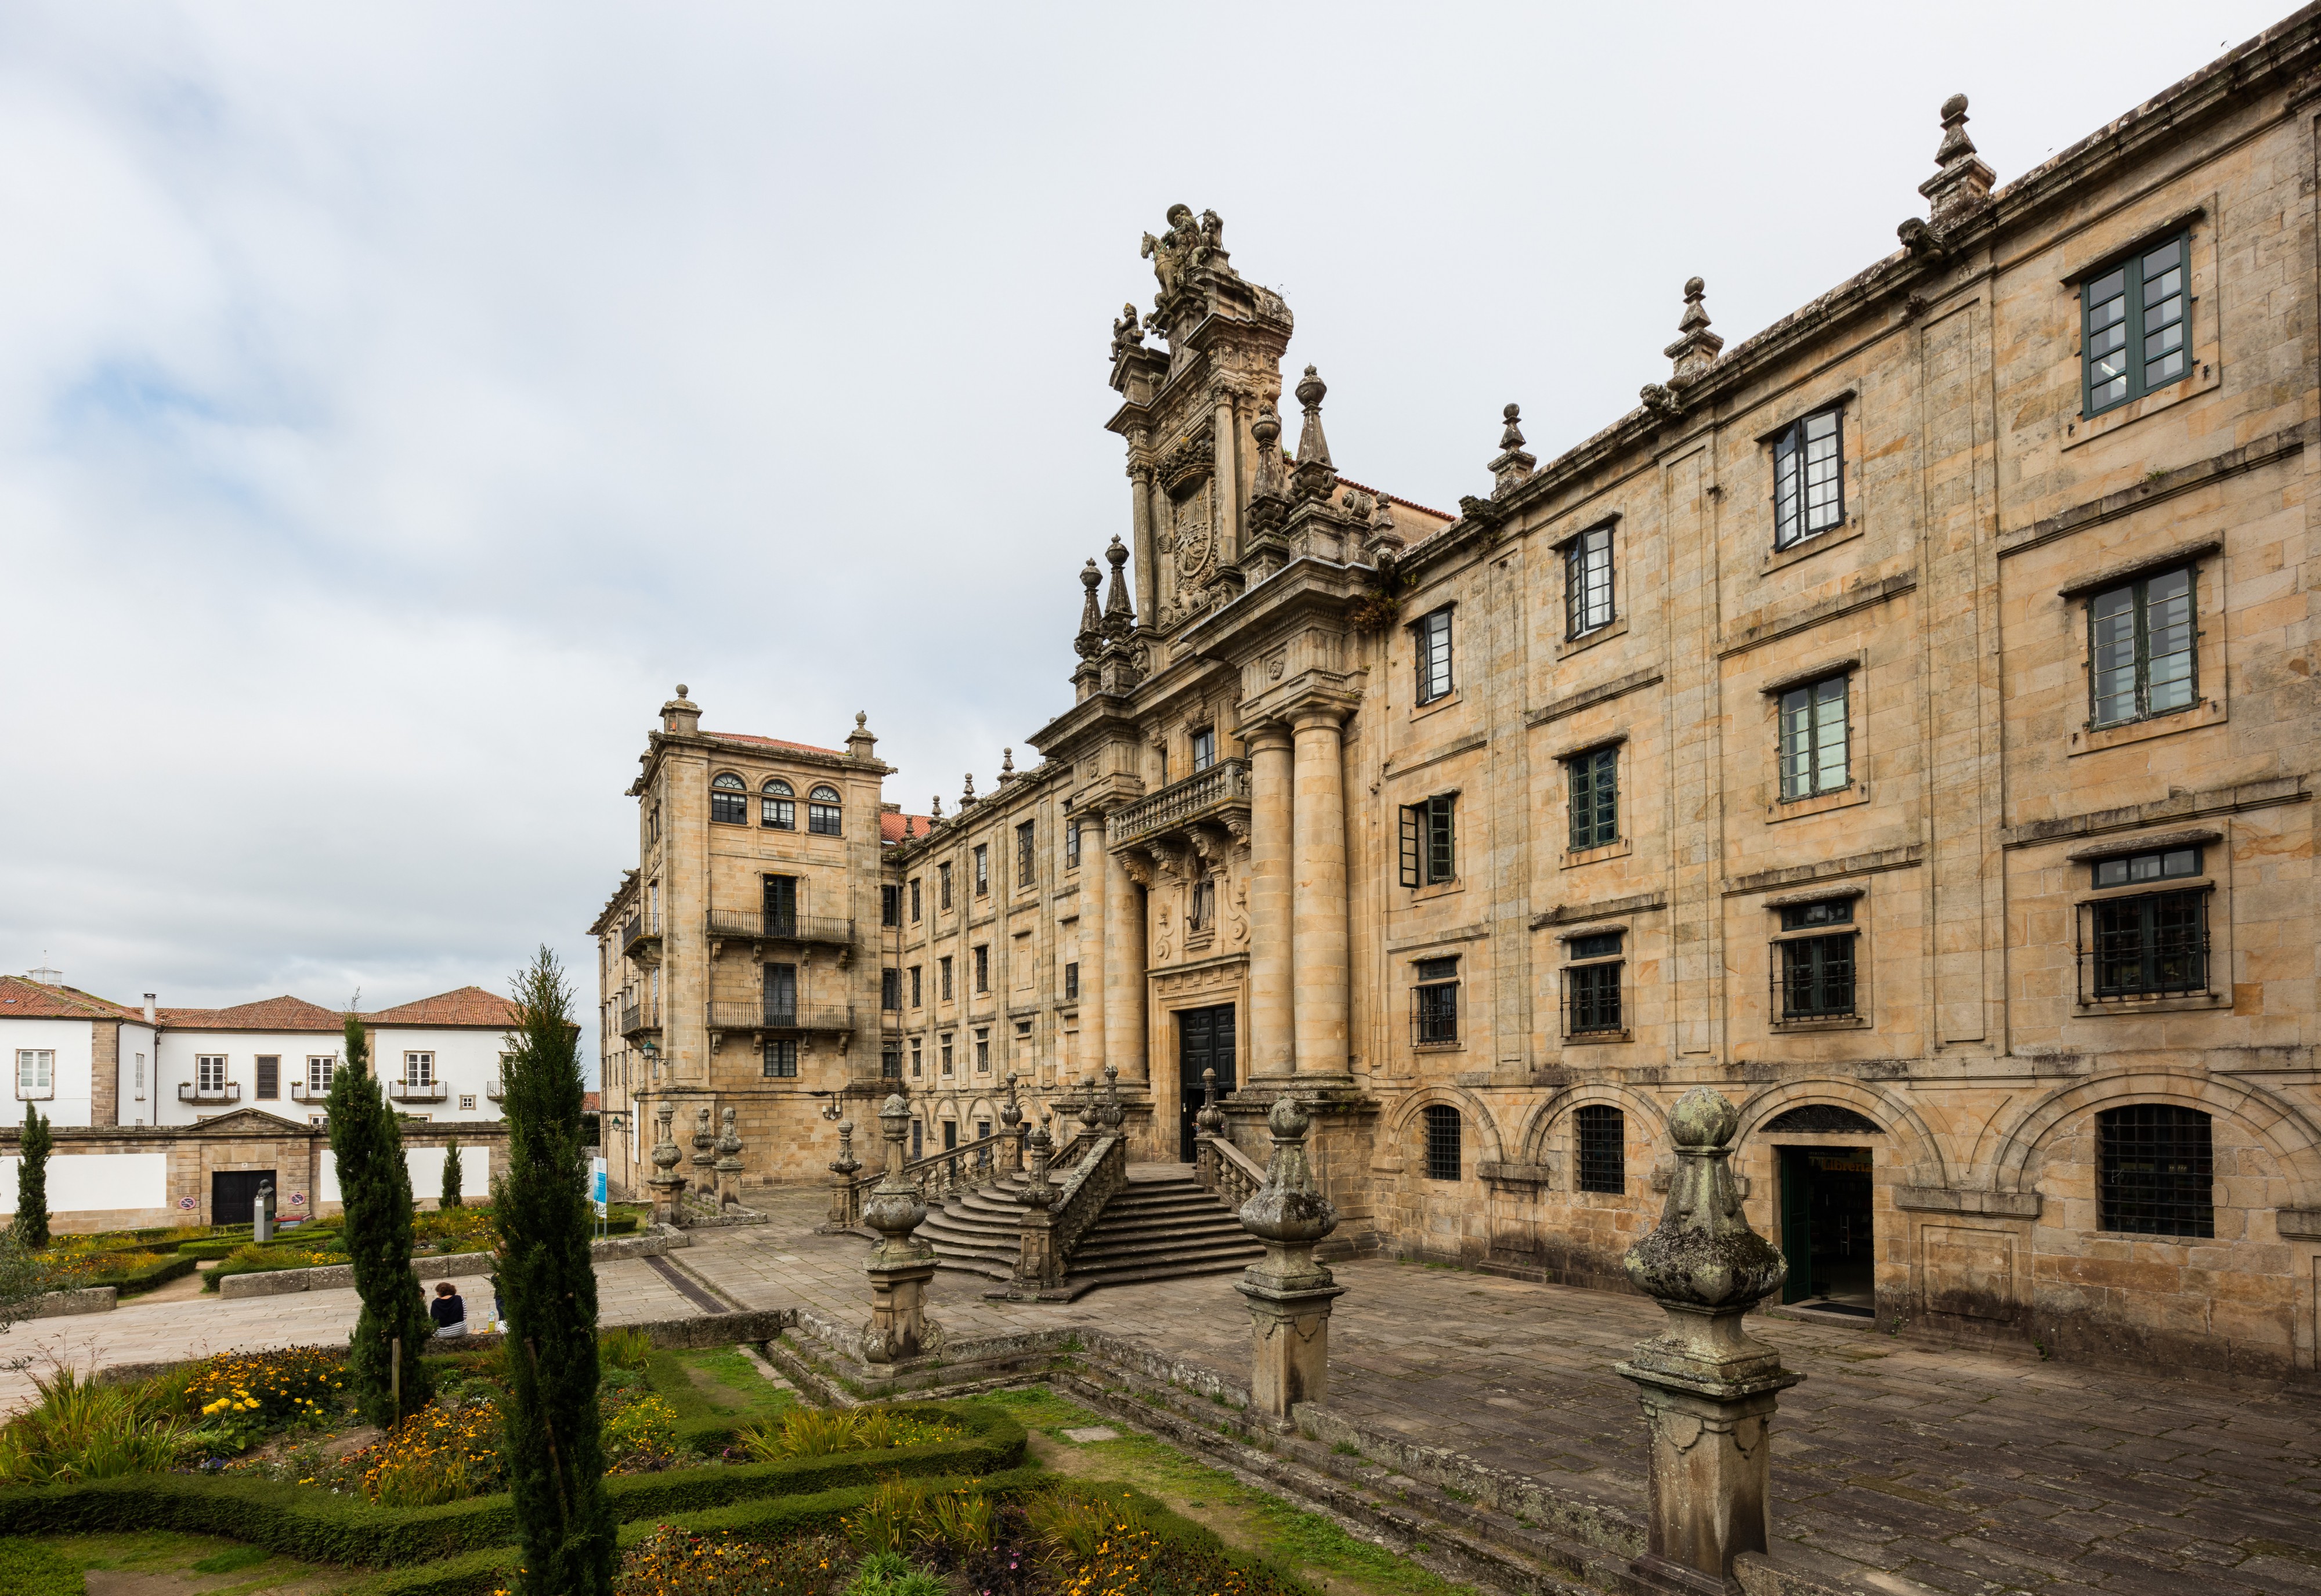 Monasterio de San Martín, Santiago de Compostela, España, 2015-09-23, DD 10